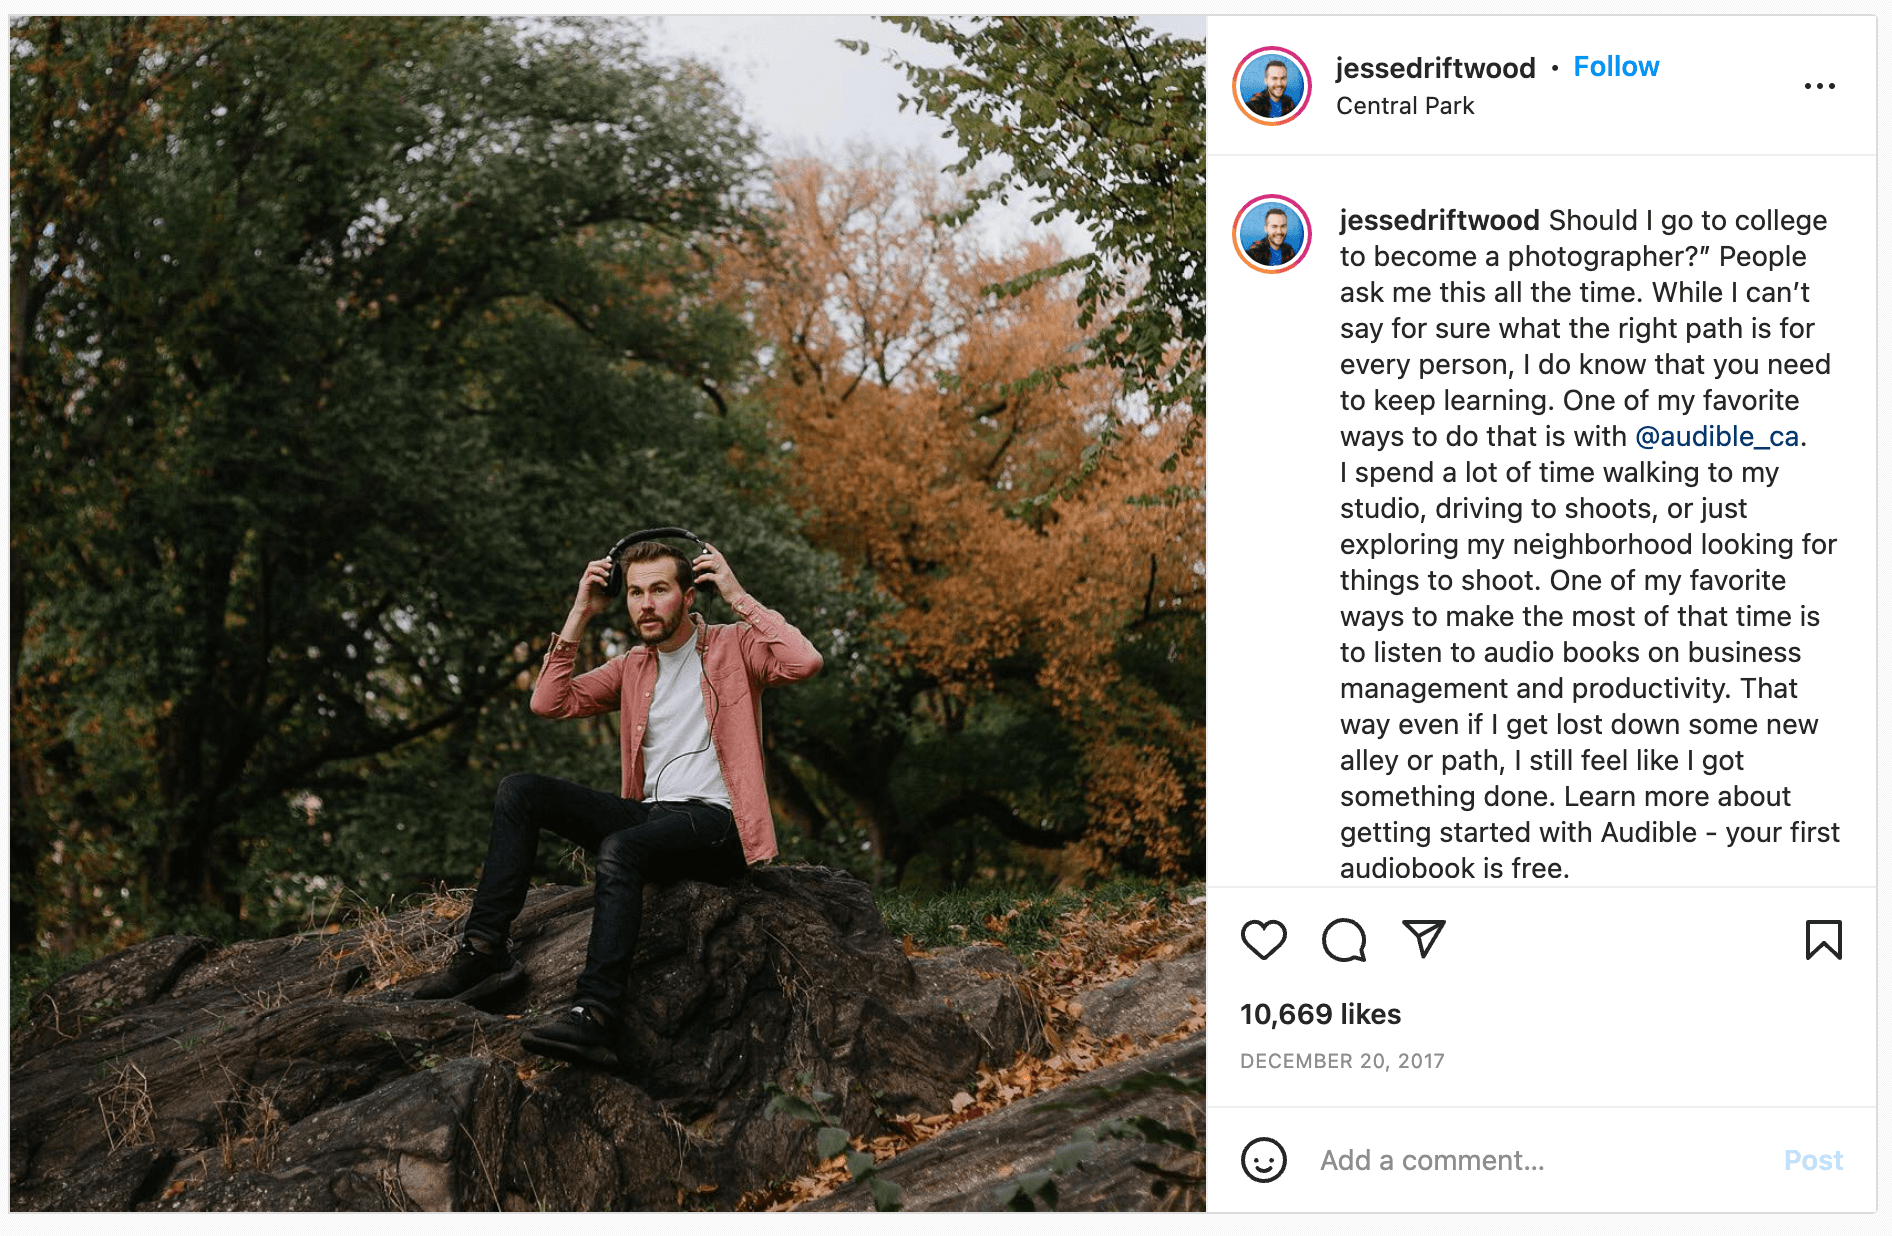 Sponsored content on Jesse Driftwood's Instagram